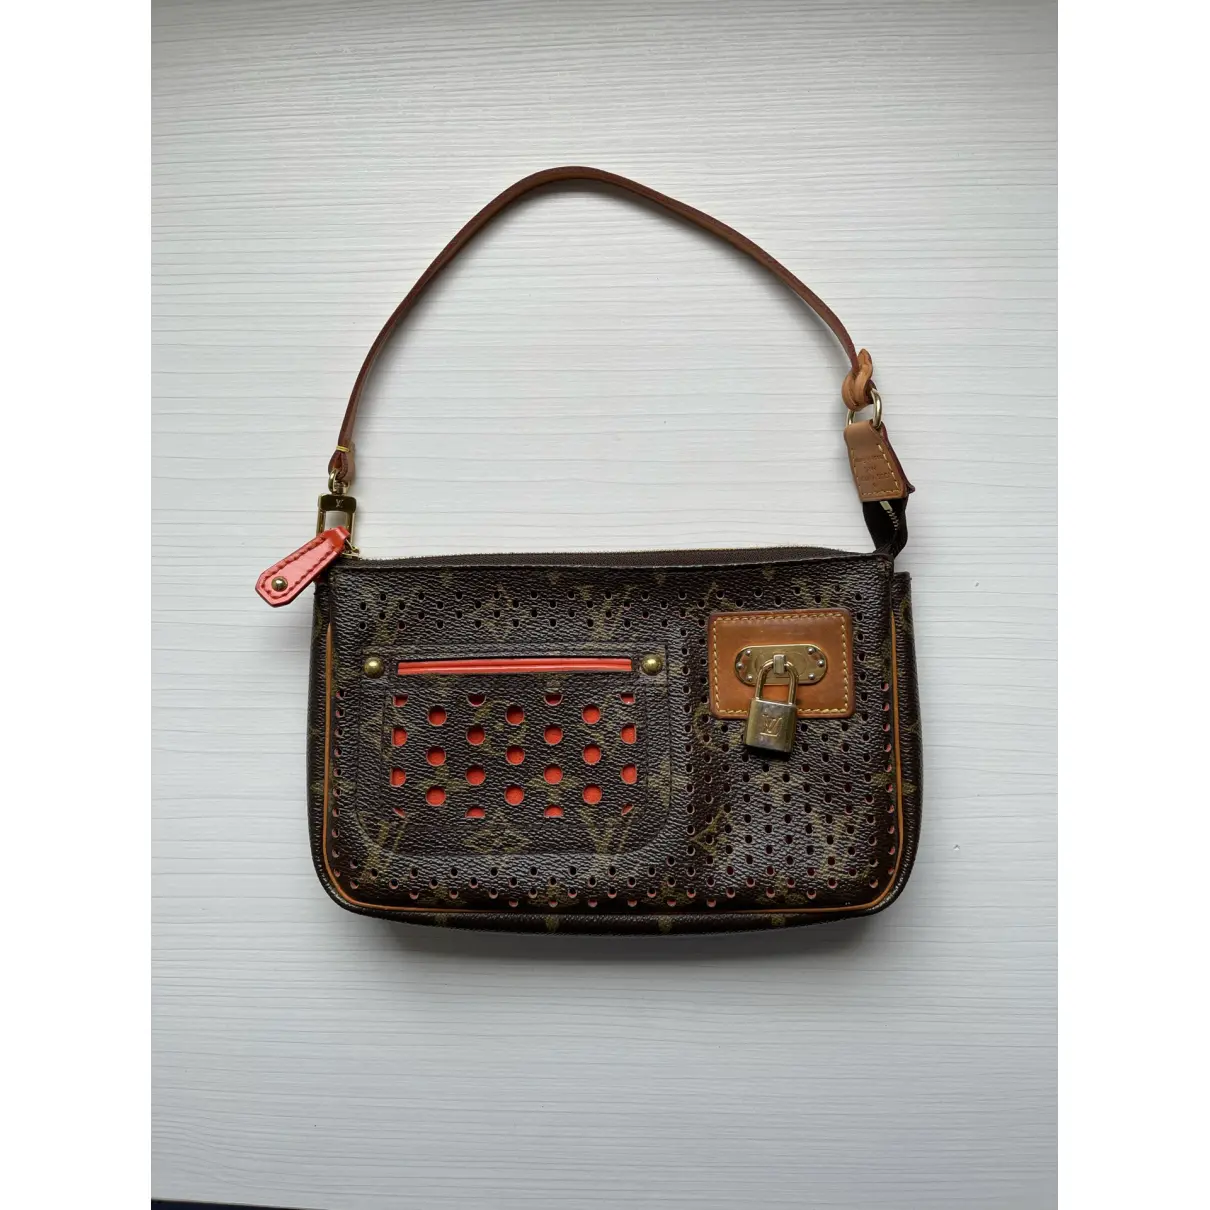 Pochette Trunk leather handbag Louis Vuitton